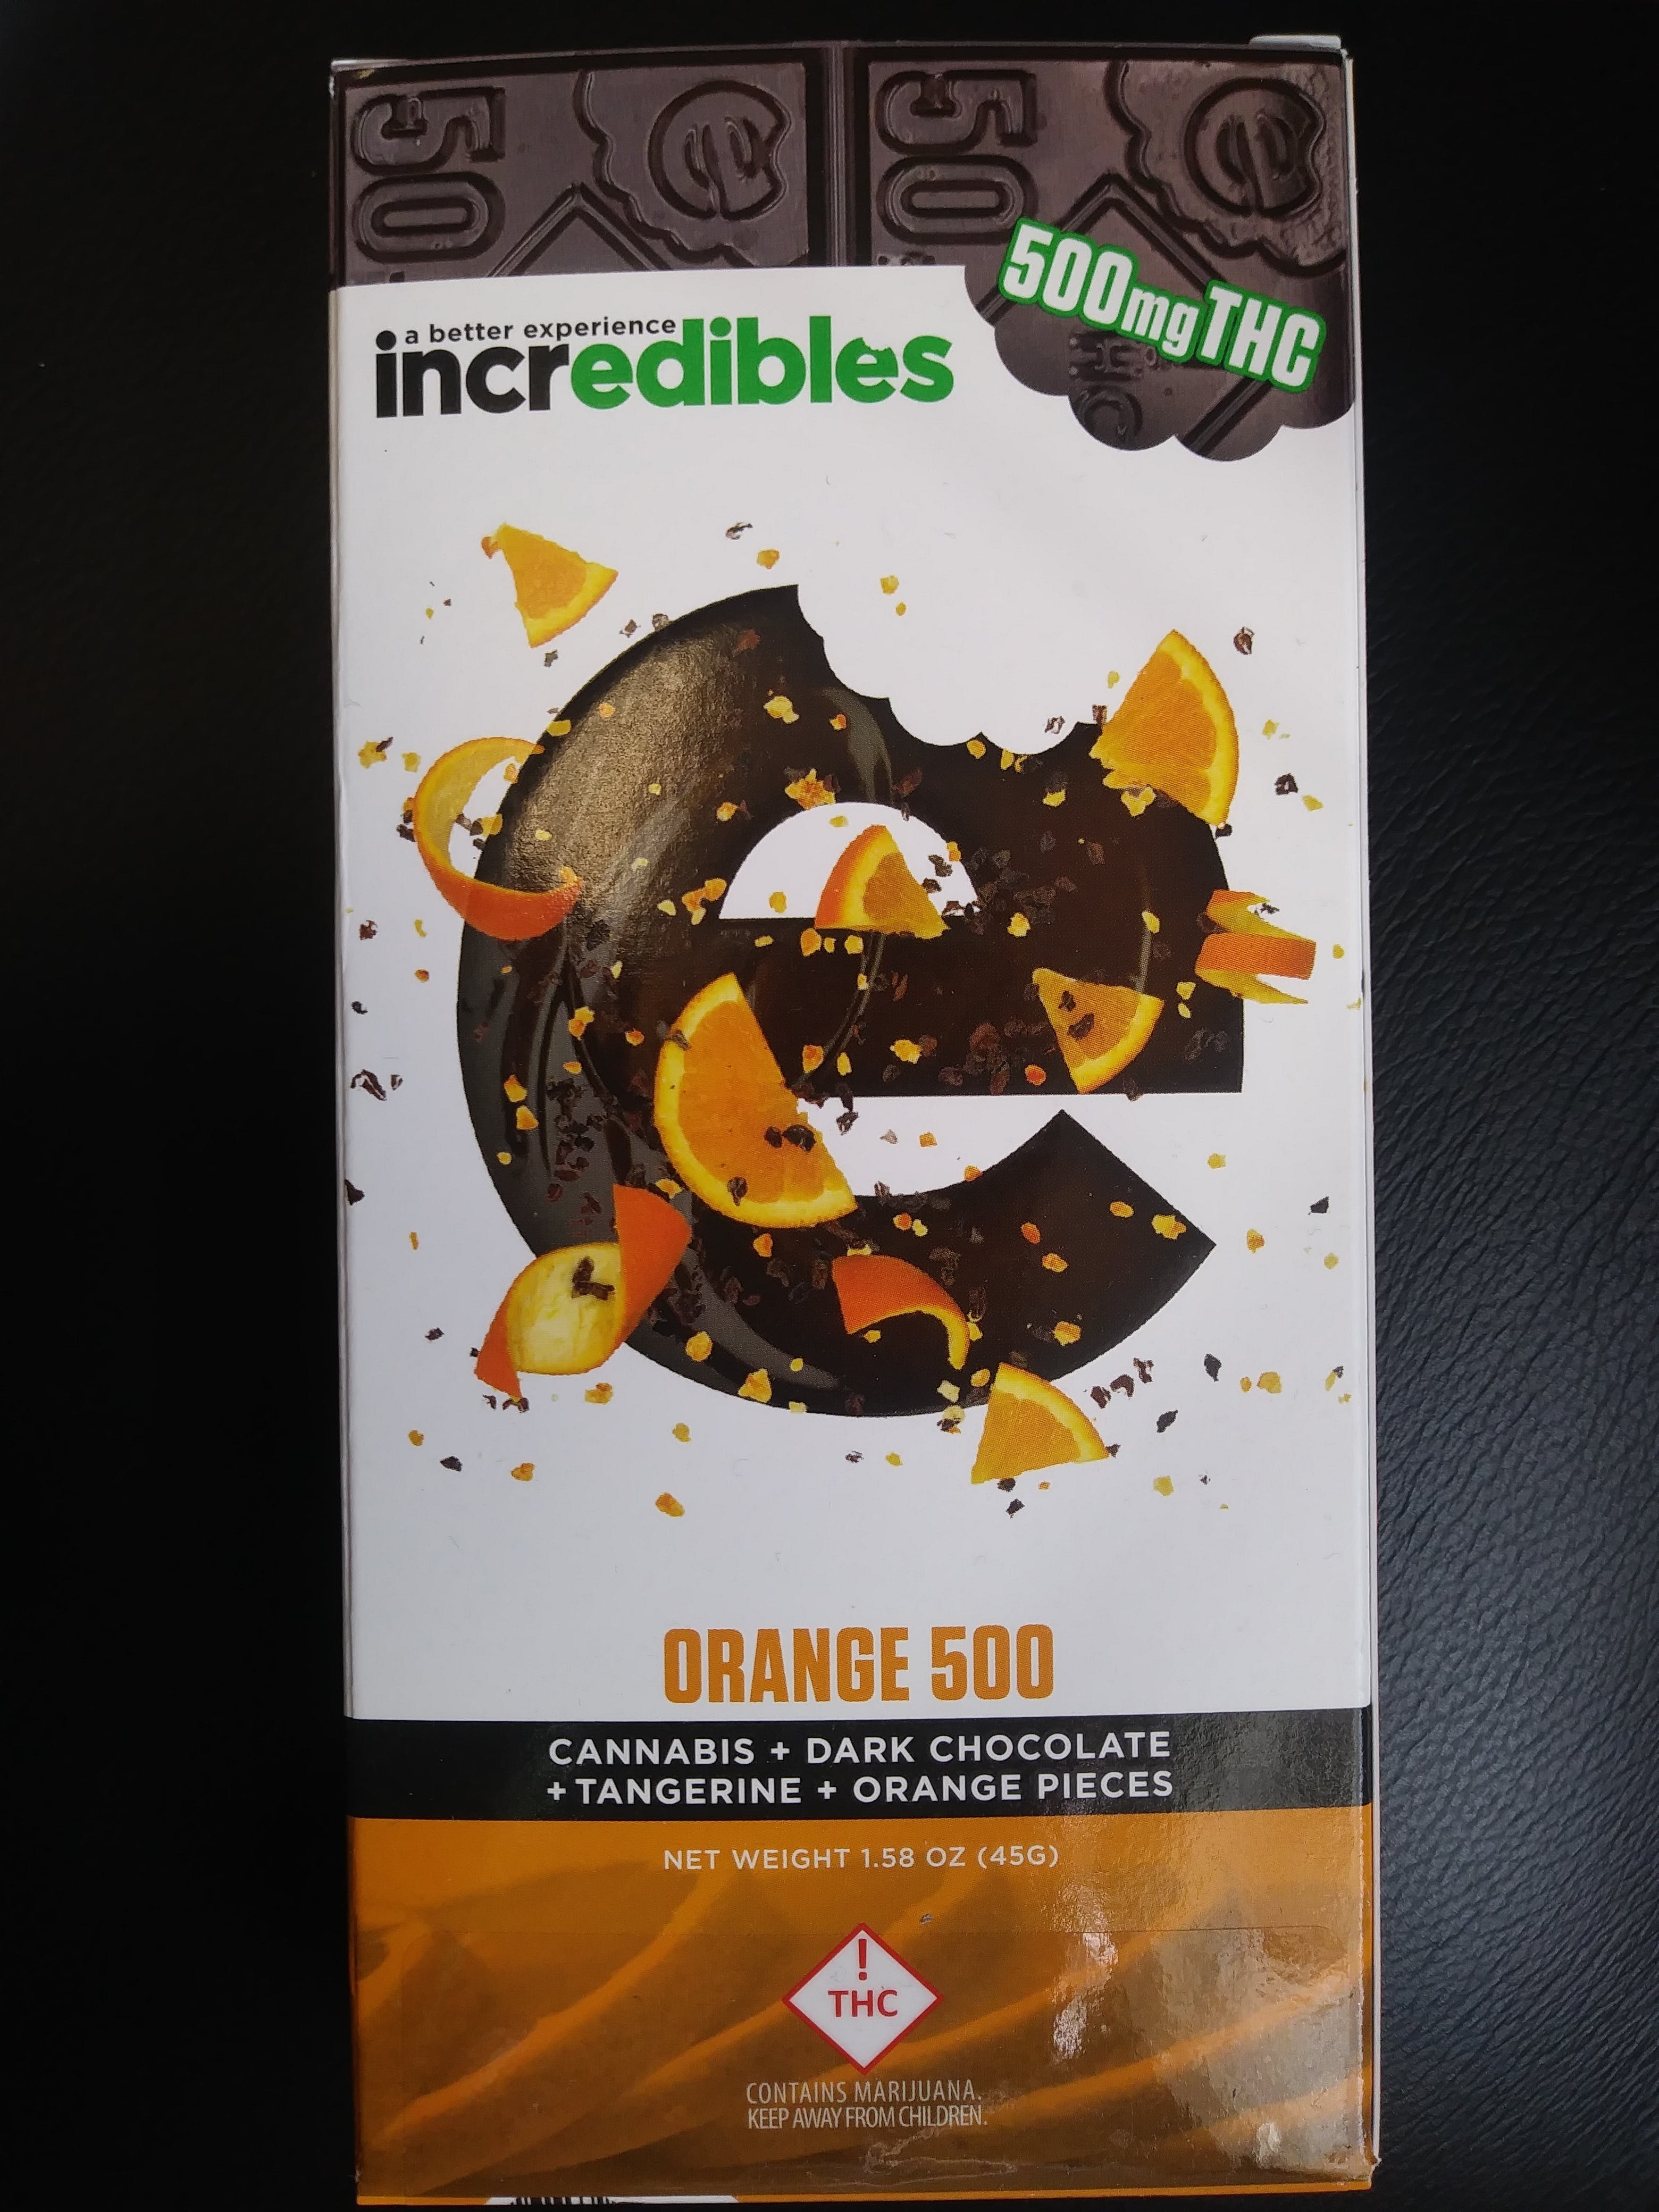 edible-incredibles-mile-higher-orange-500-2c-500mg-med